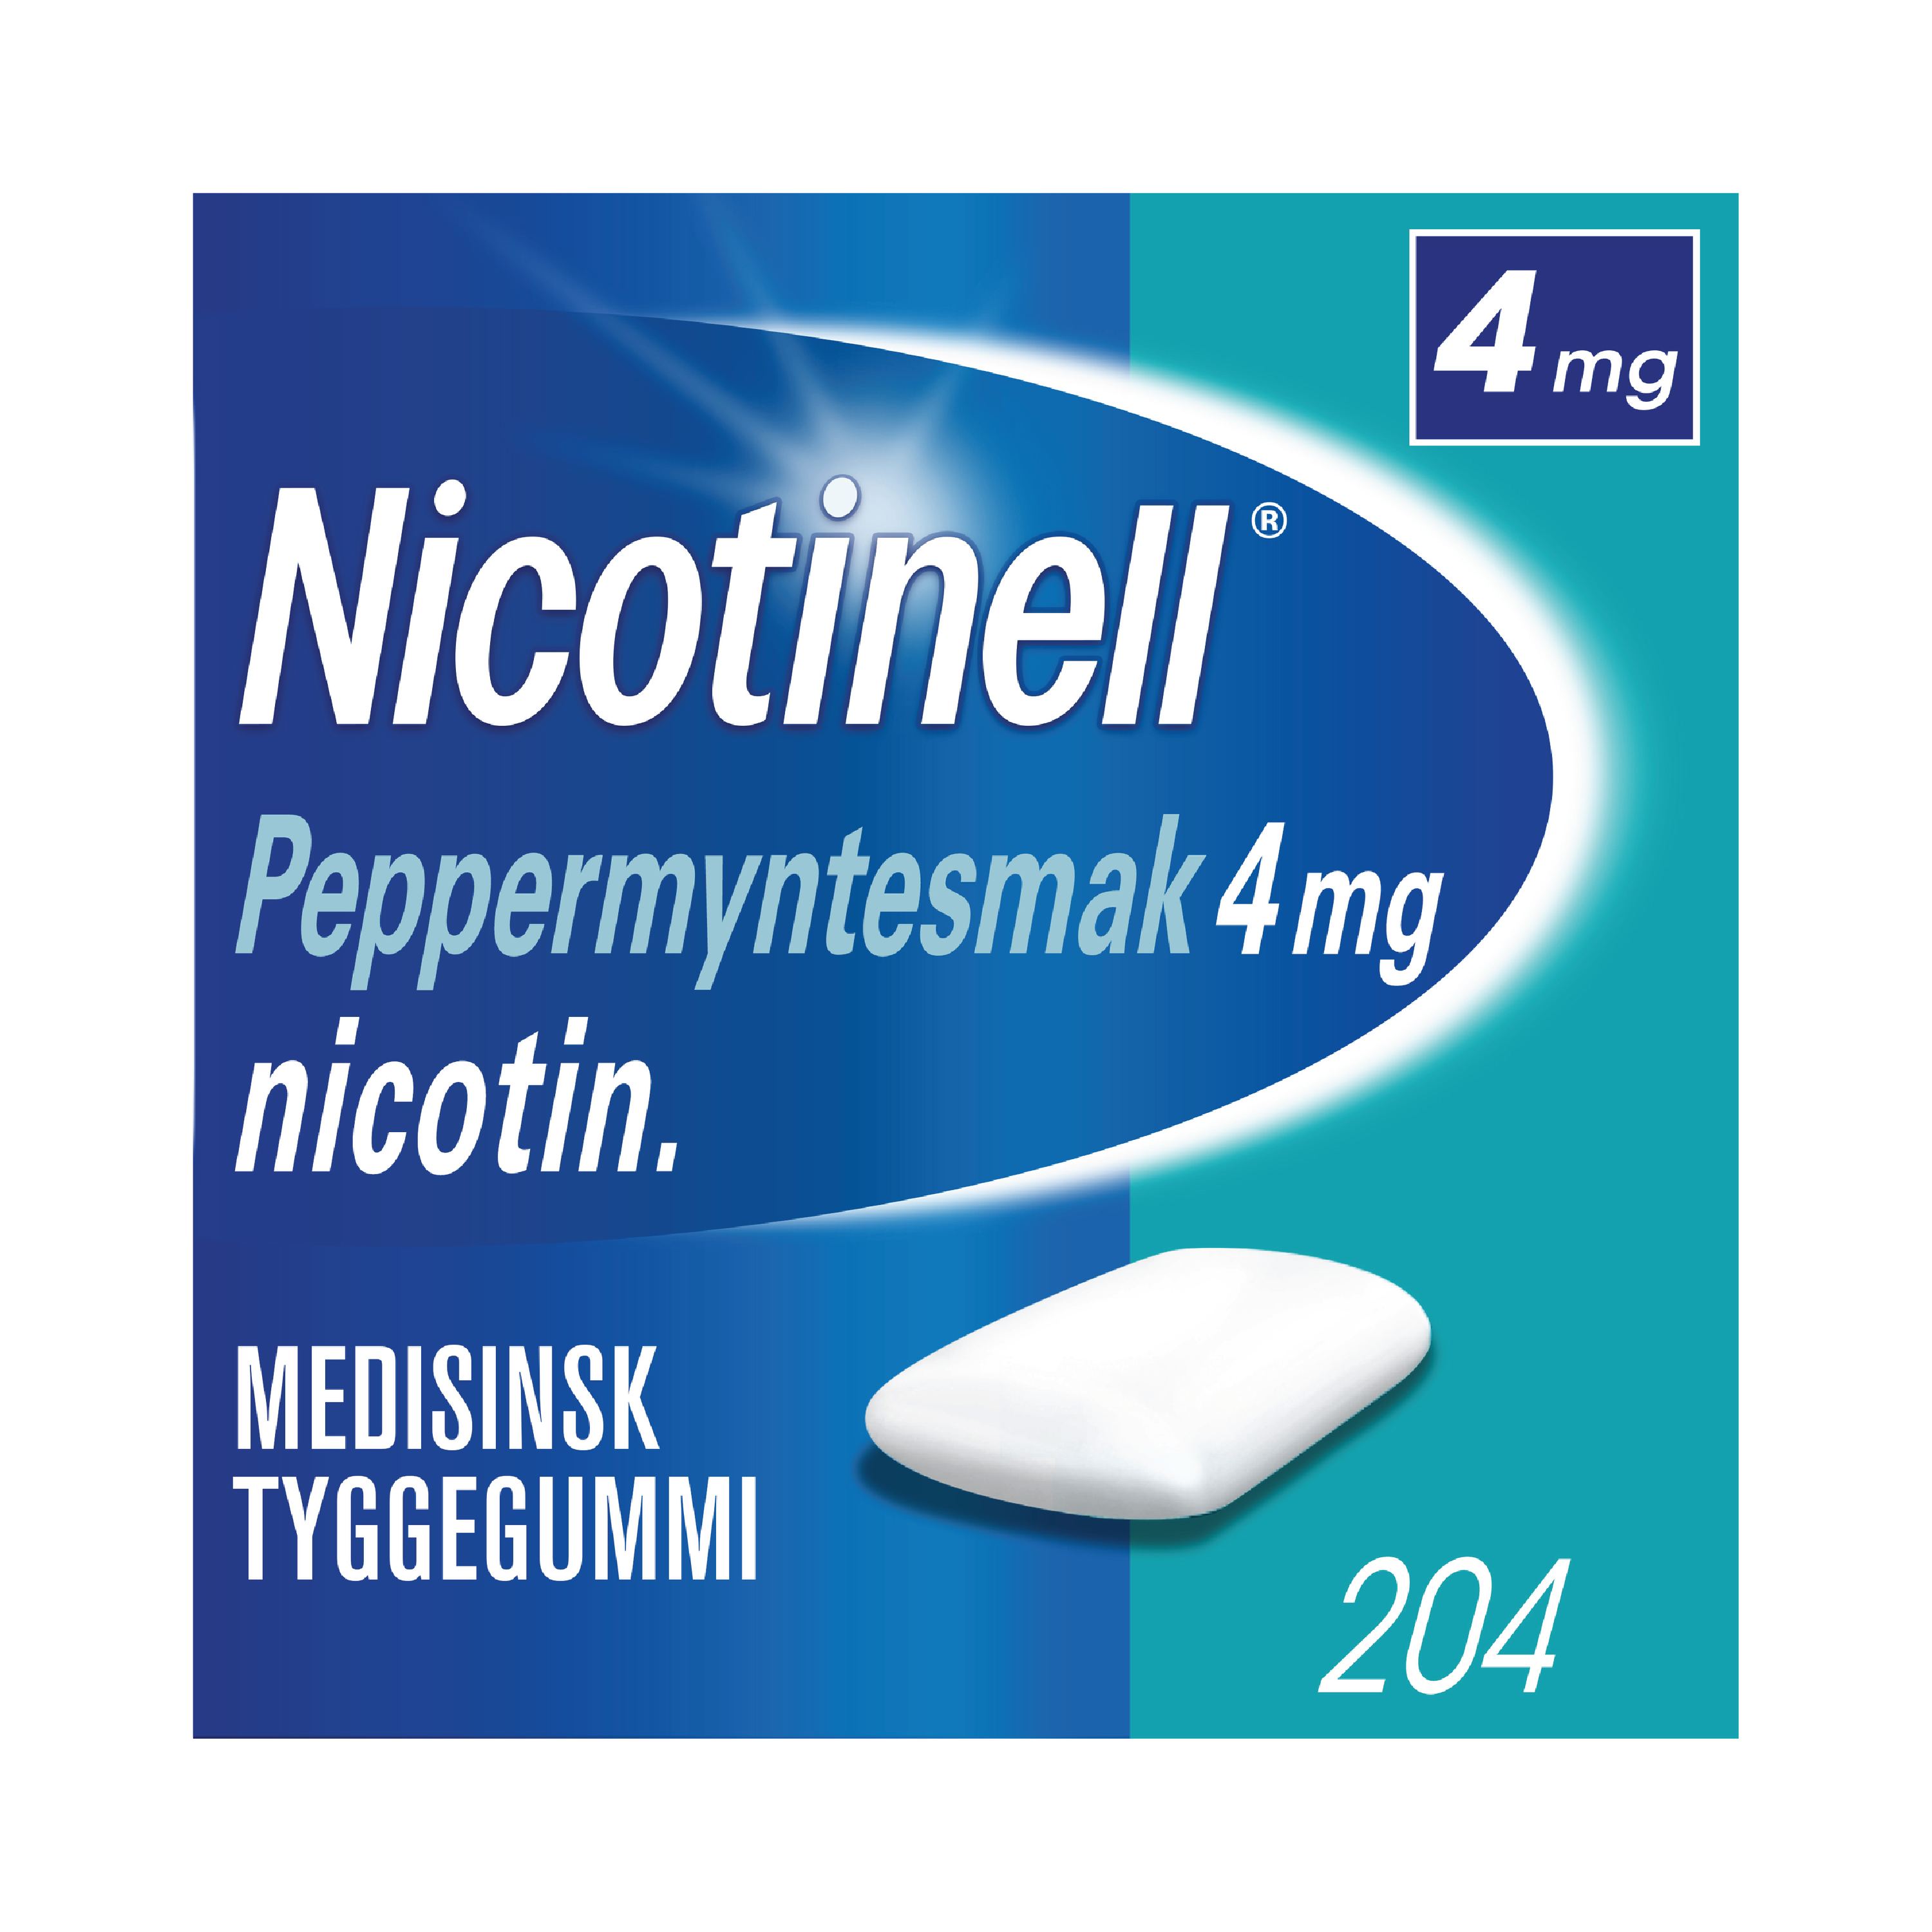 Nicotinell Tyggegummi 4mg peppermynte, 204 stk.